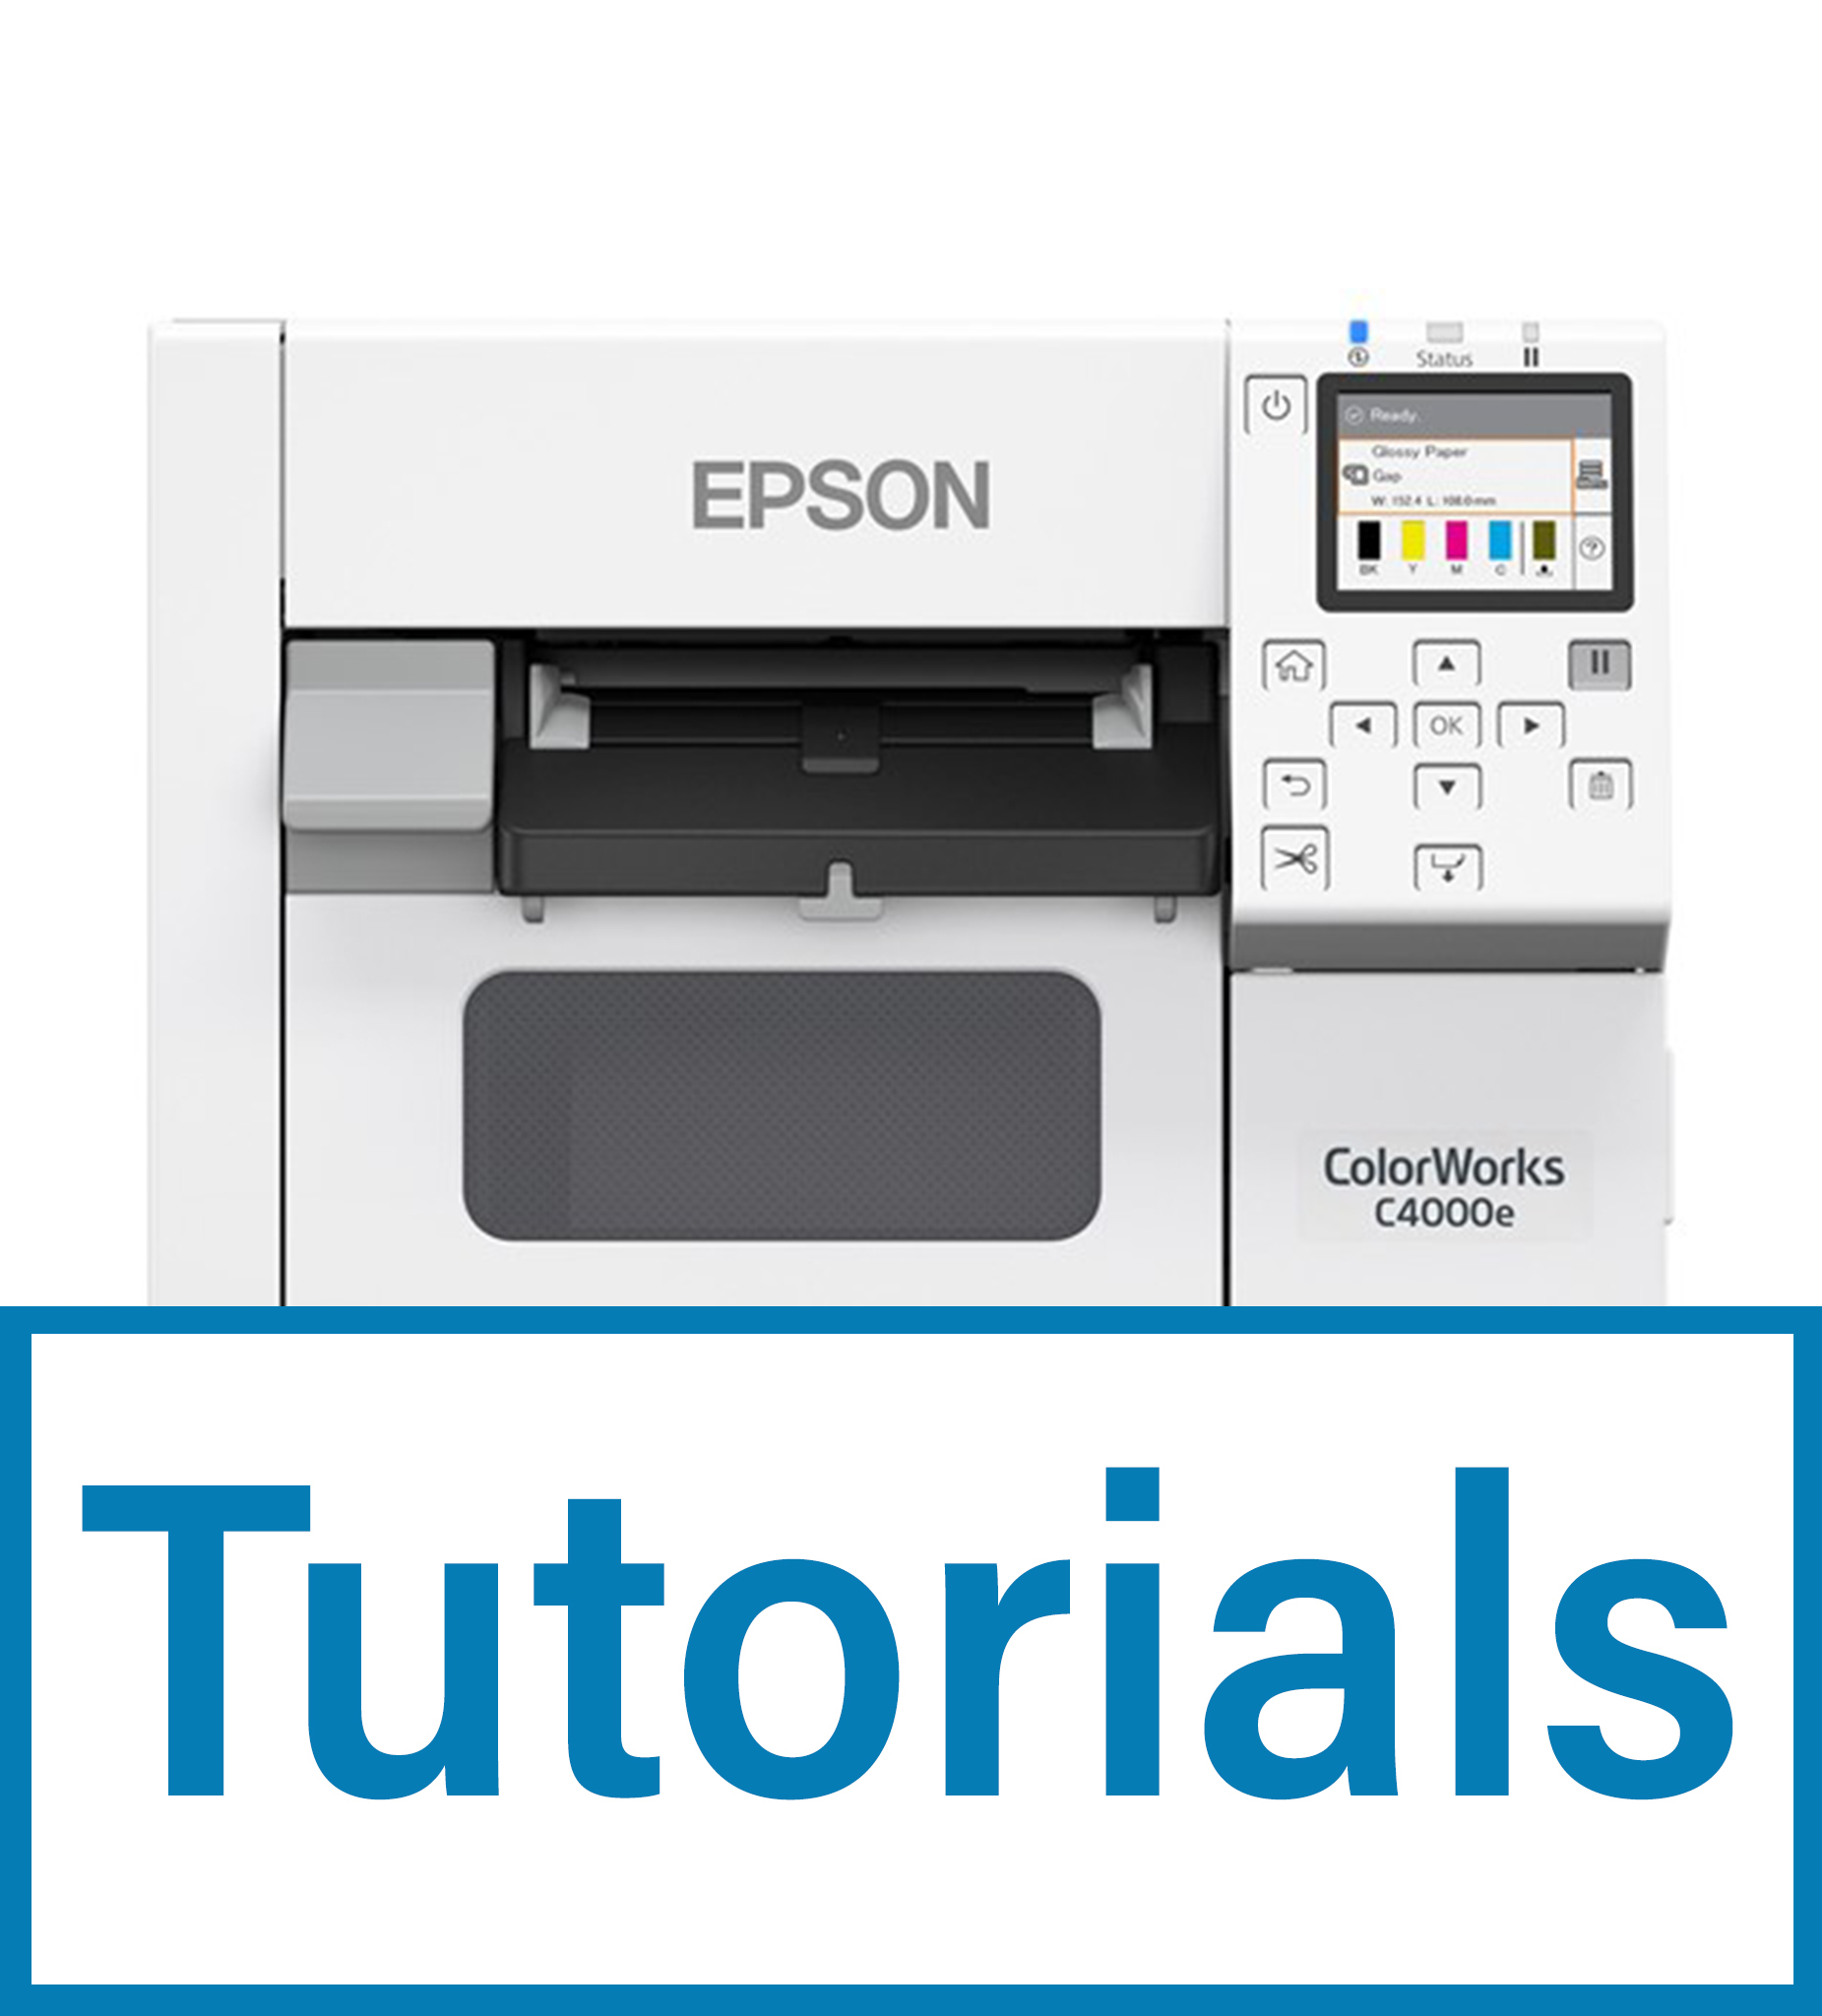 Kép a EPSON ColorWorks CW C4000 kategóriához